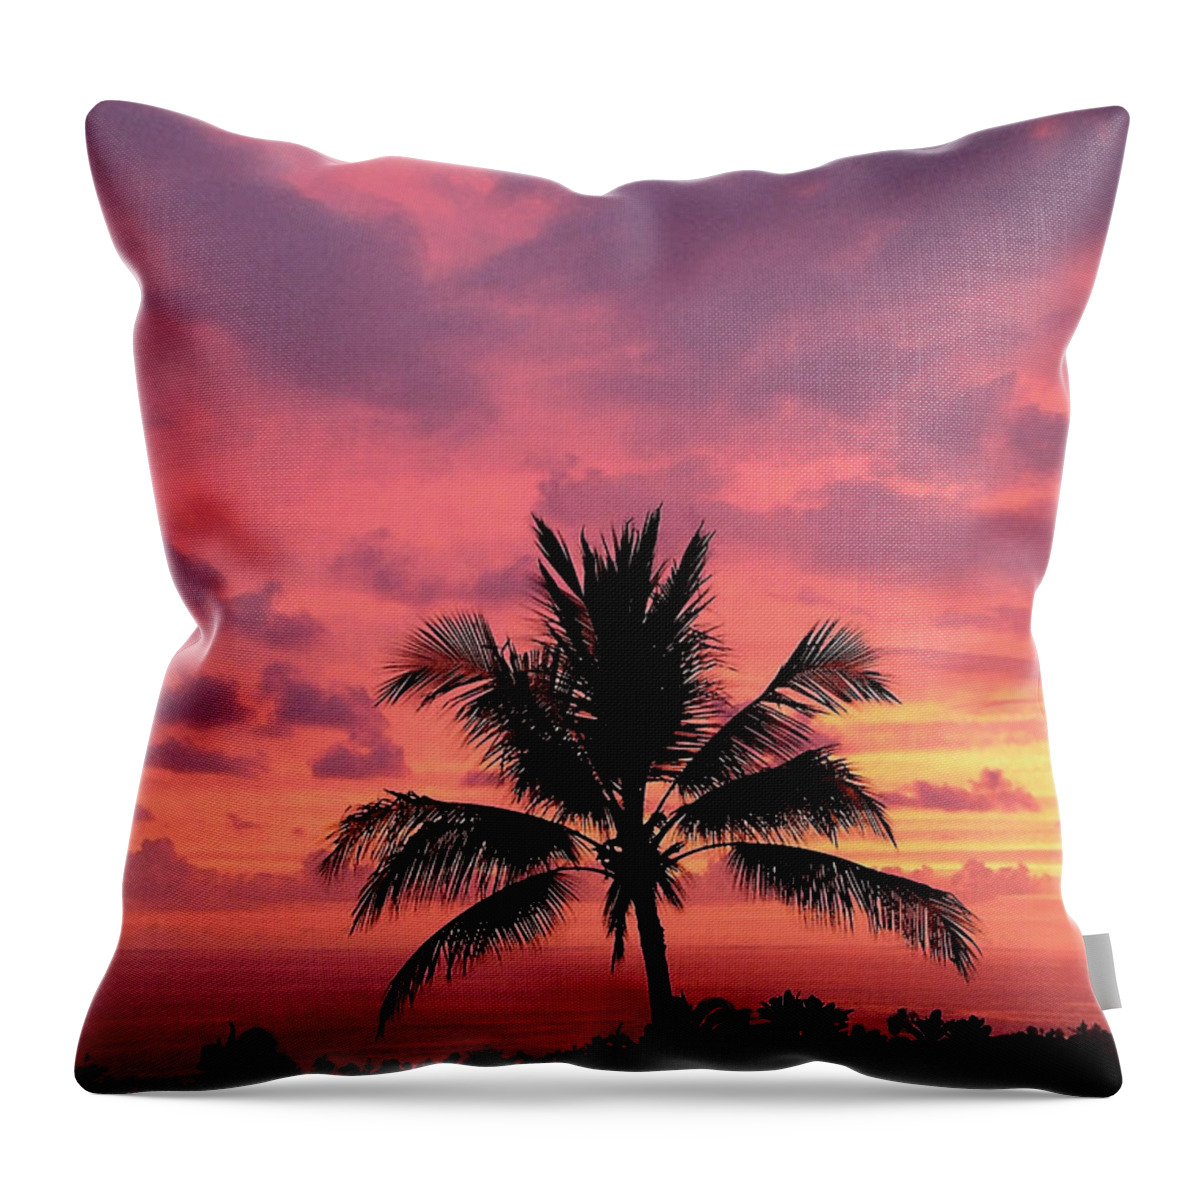 Sunsets Throw Pillow featuring the photograph Tropical Sunset by Karen Nicholson